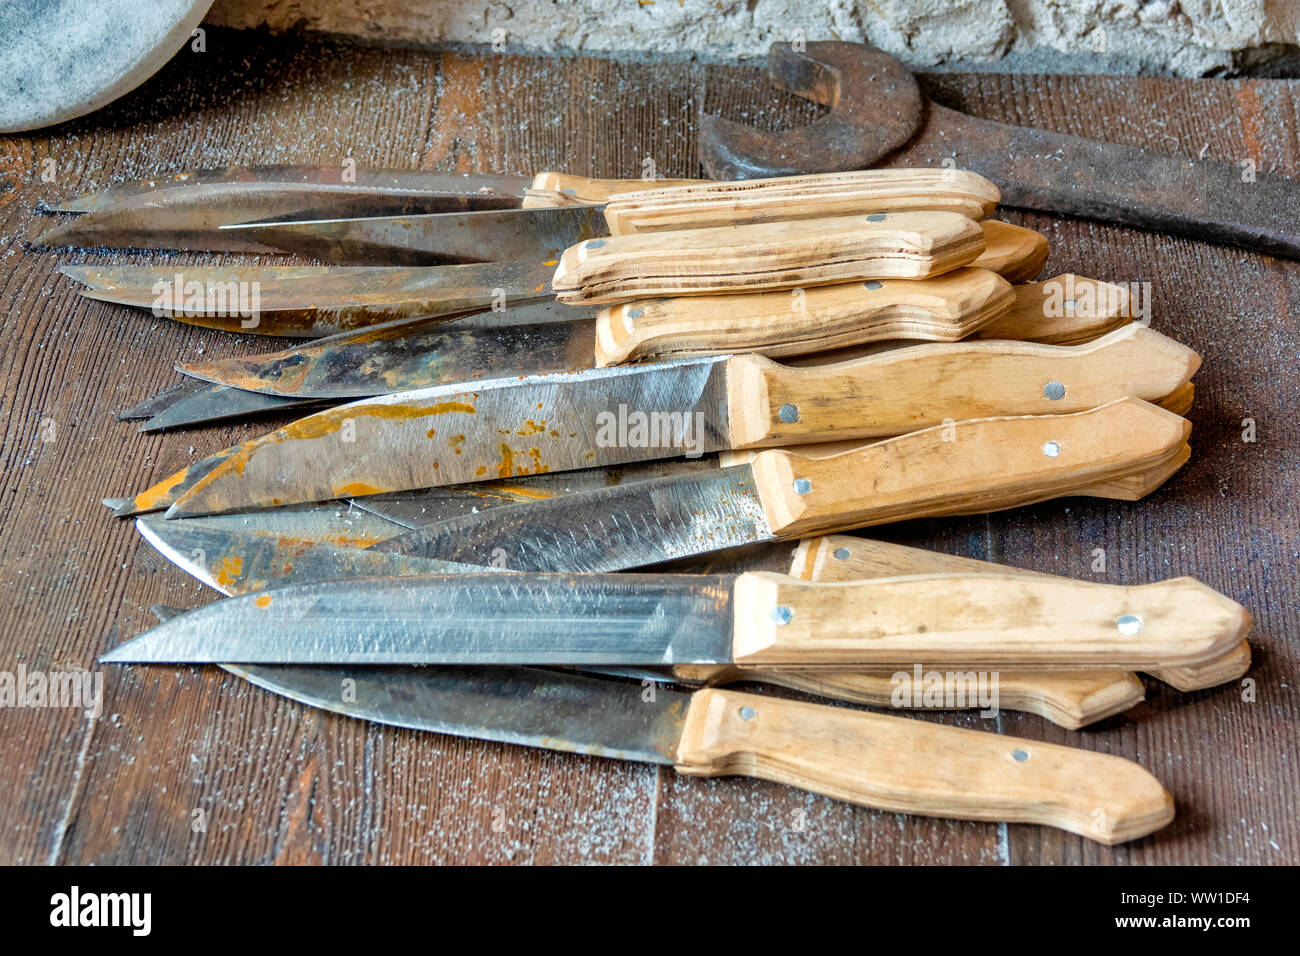 Handmade knives in the village of Damerchi, famous in Azerbaijan for its blacksmiths Stock Photo